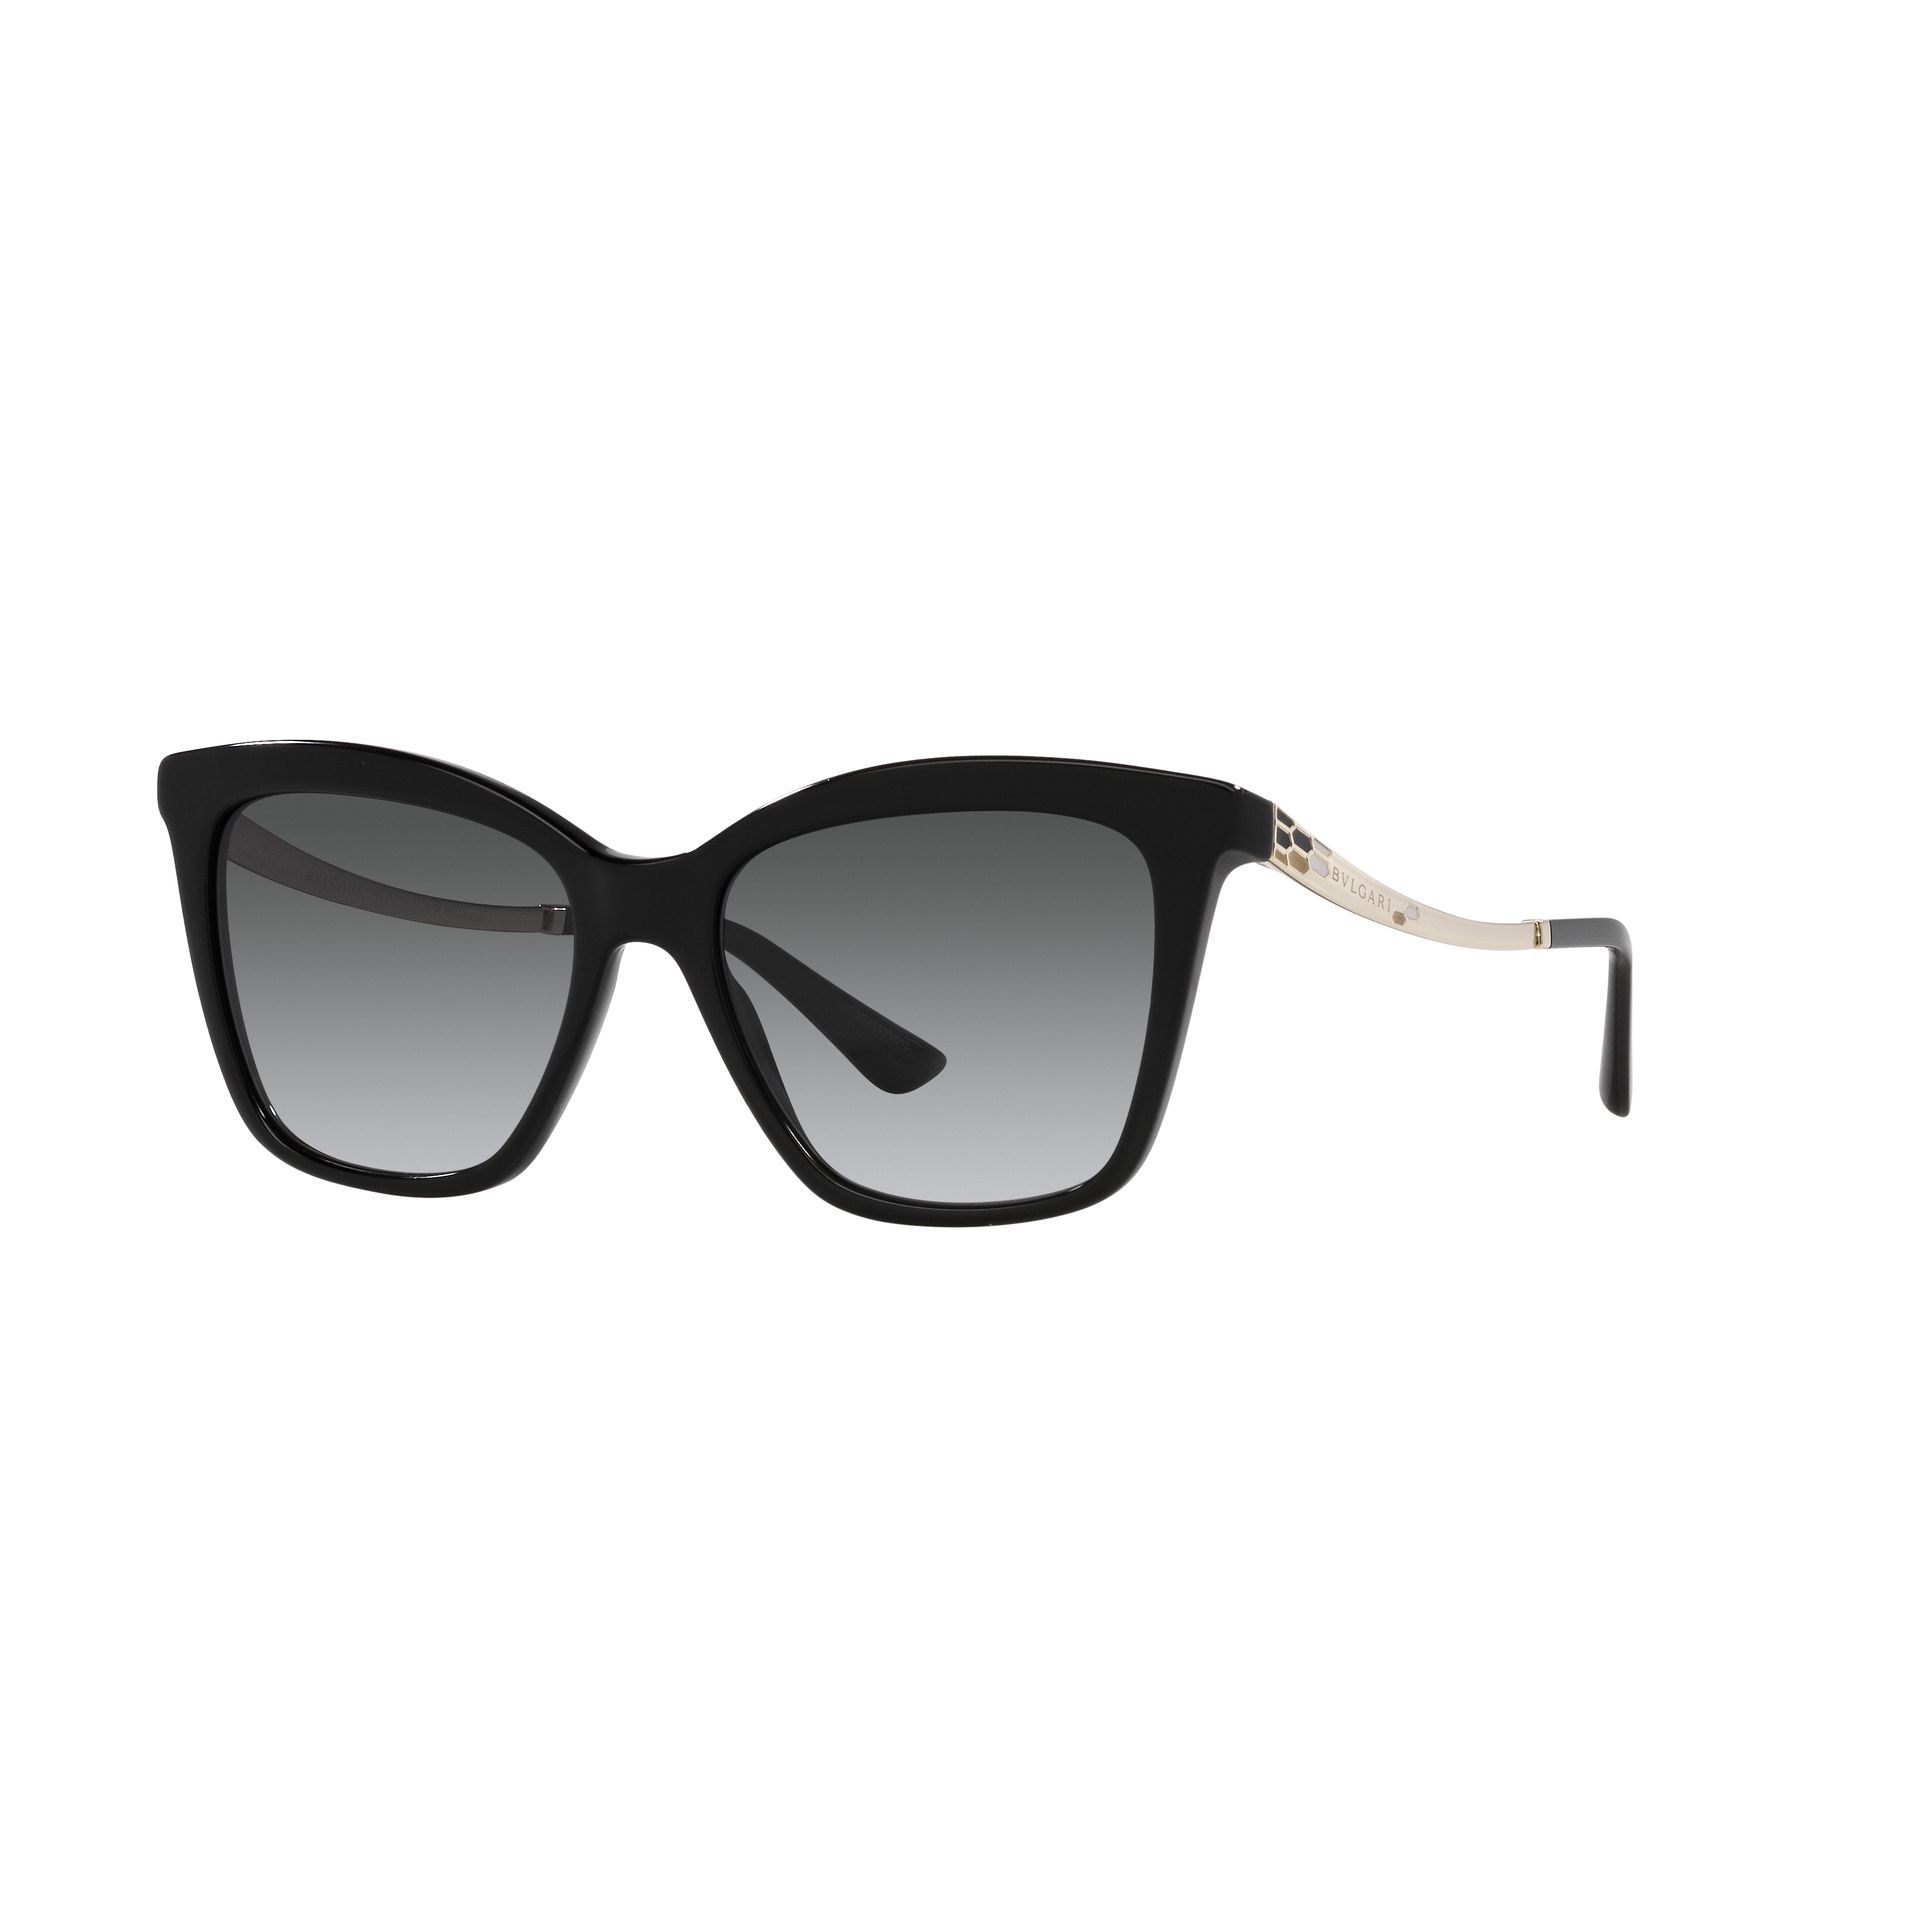 0BV8257 Cat Eye Sunglasses 501 T3 - size 54